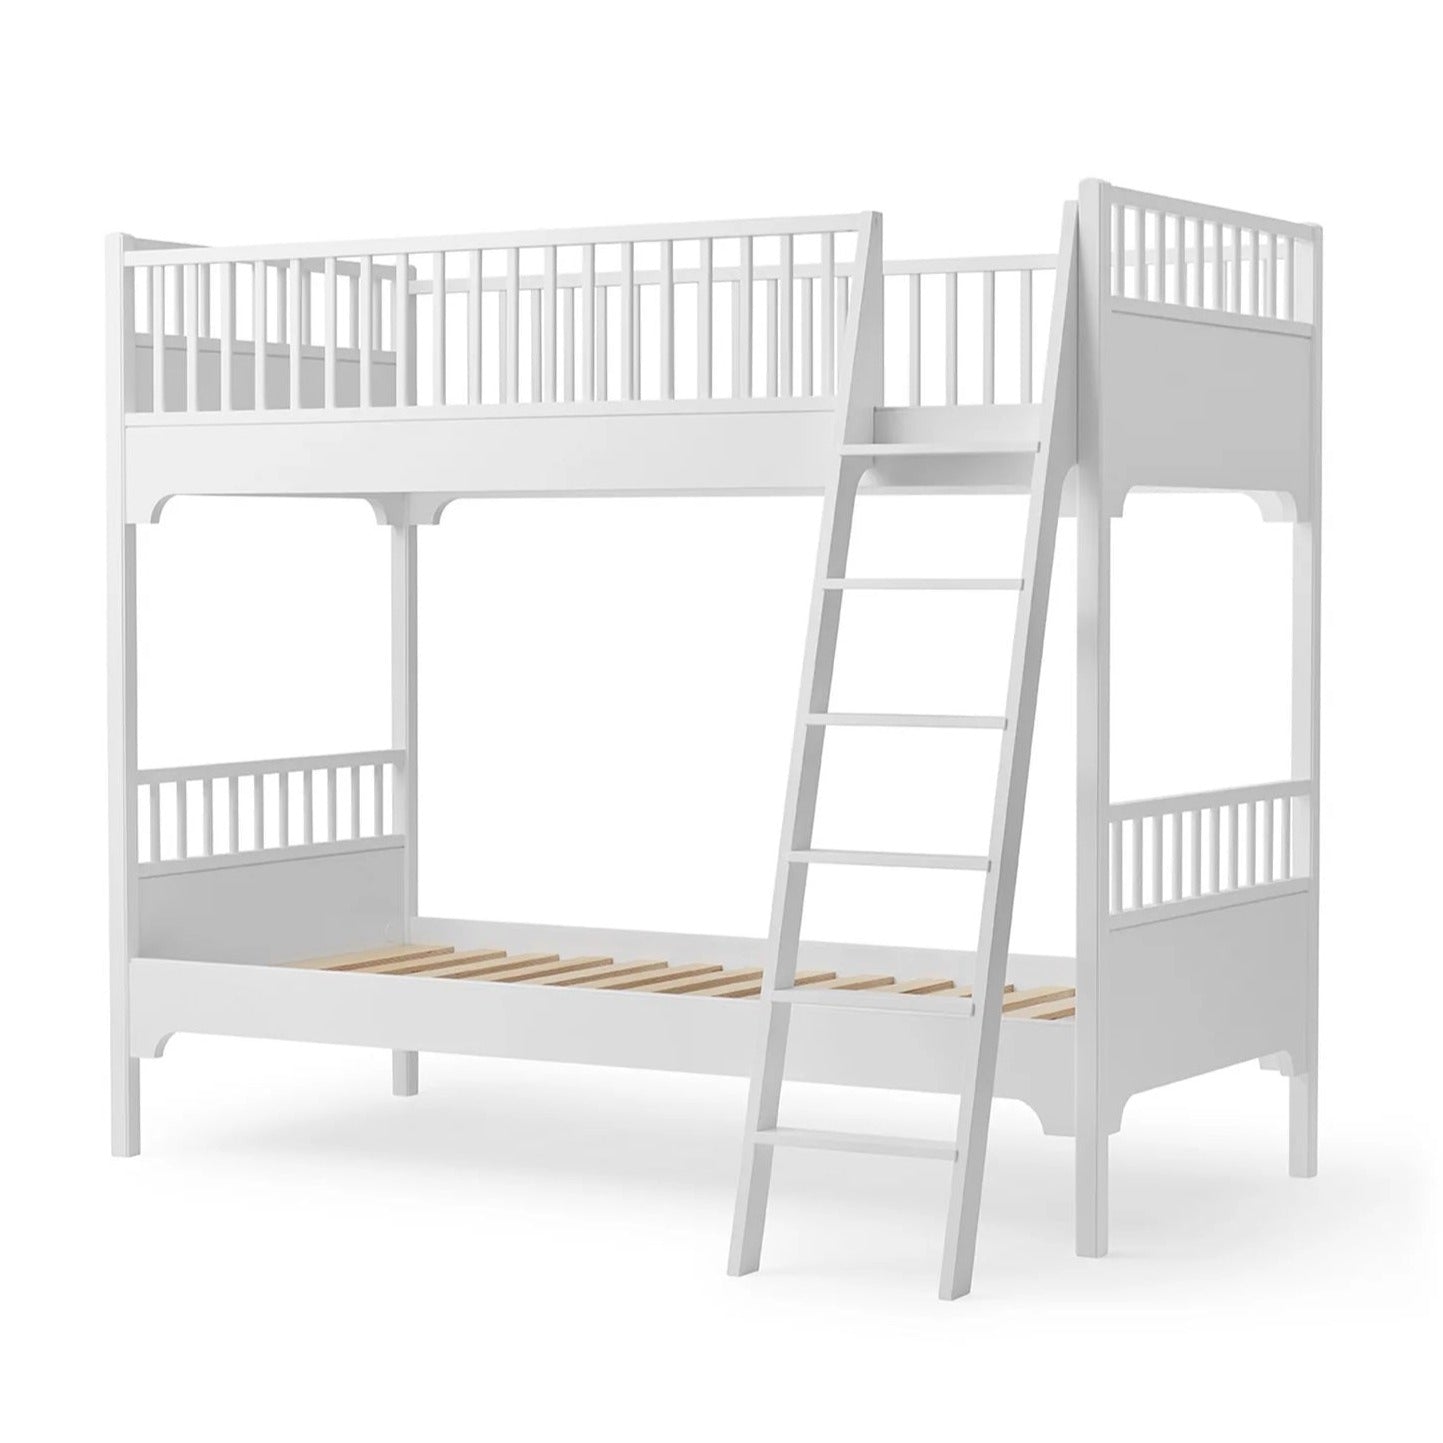 Oliver Furniture Seaside Classic Bunk Bed With Slant Ladder